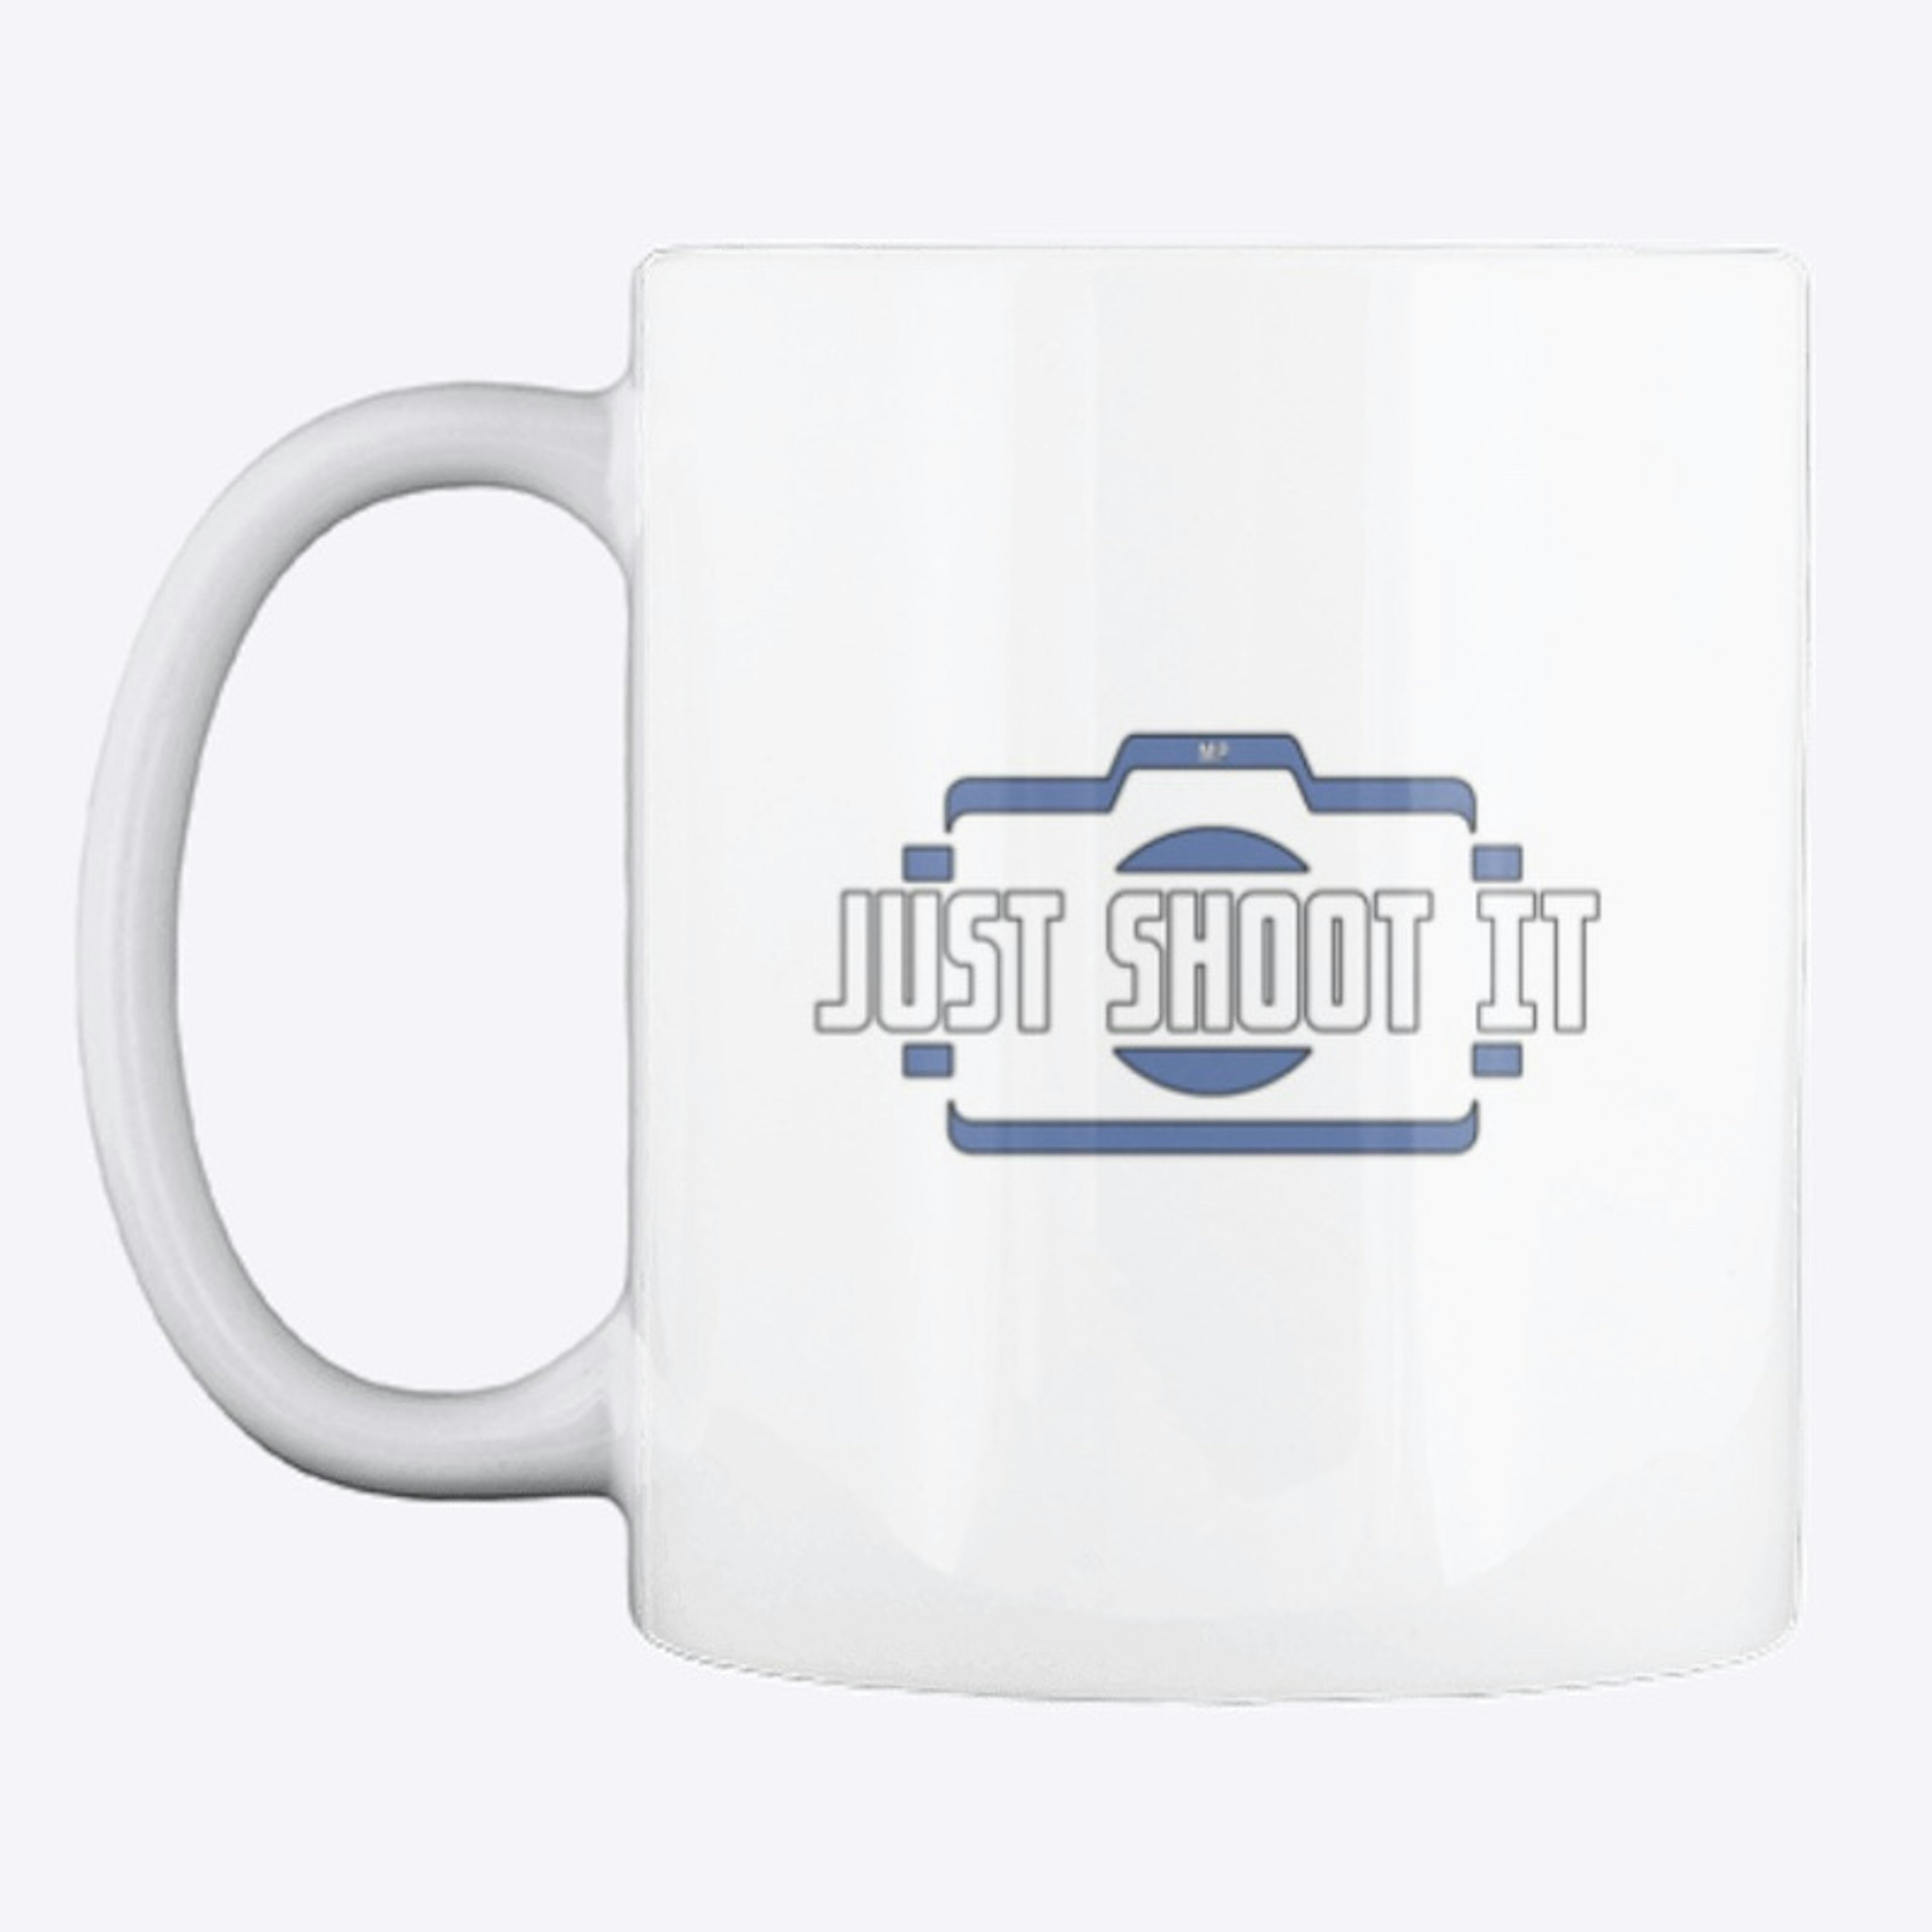 Just Shoot it mug